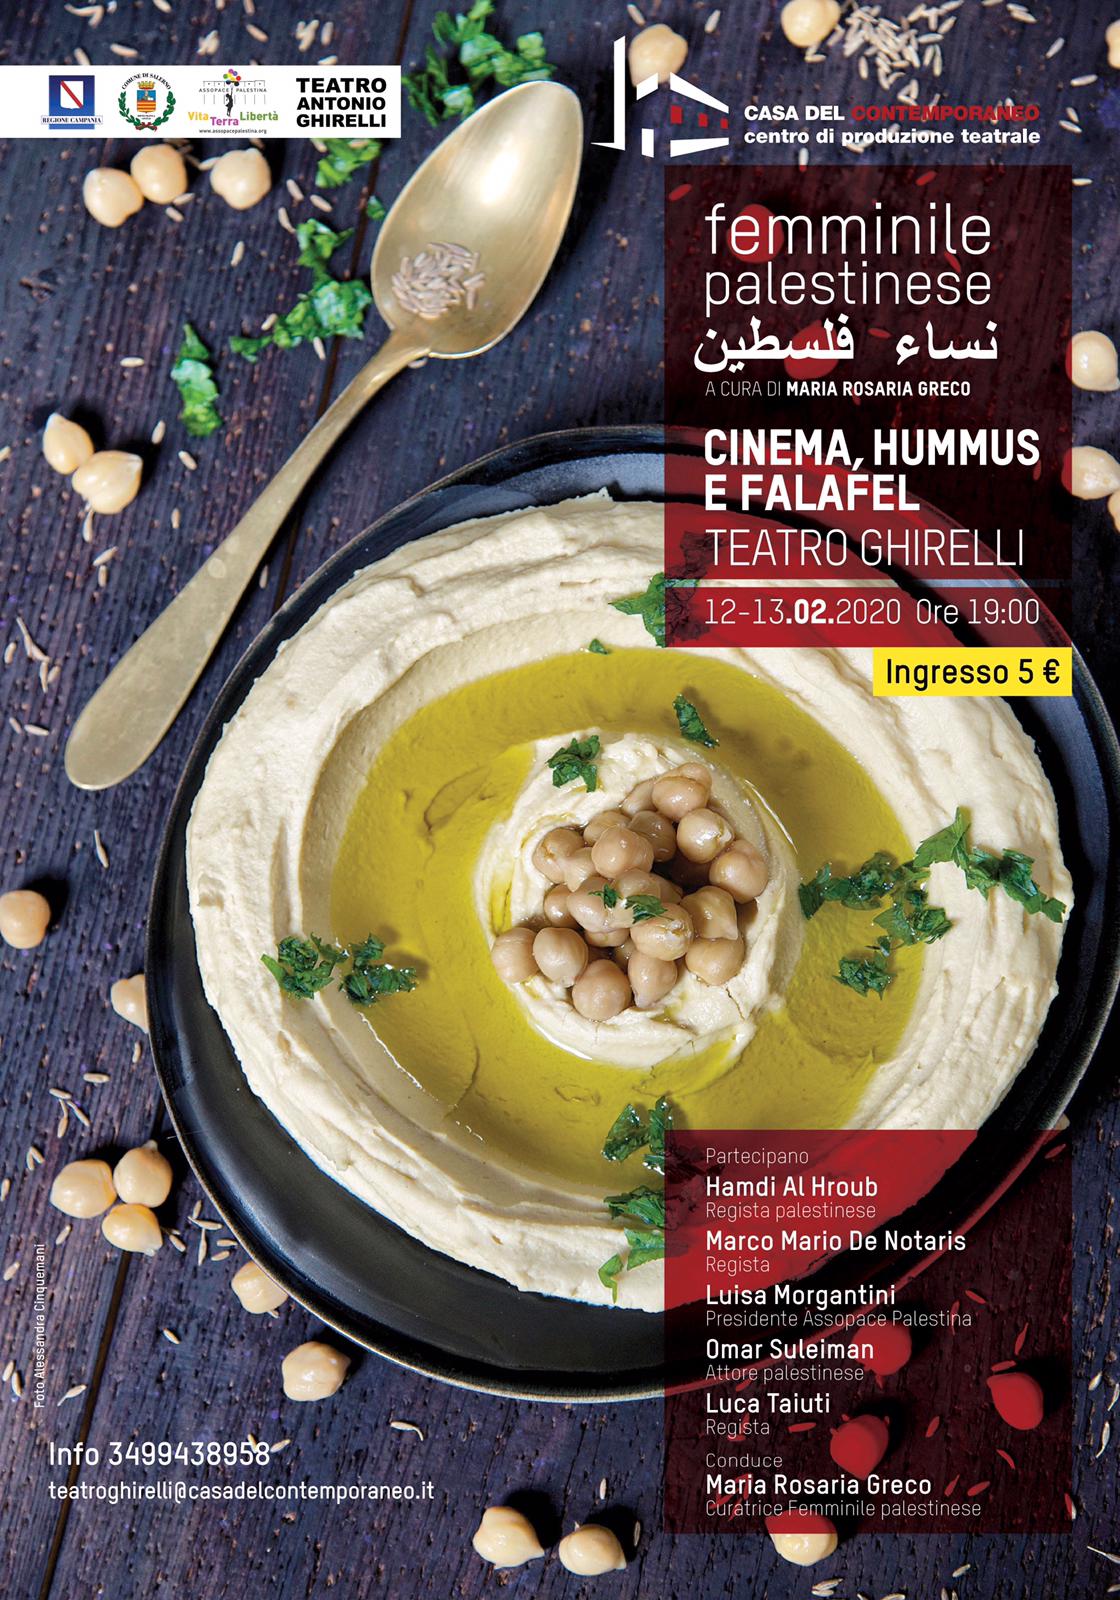 Salerno 12 e 13 febbraio: “Cinema, hummus e falafel”